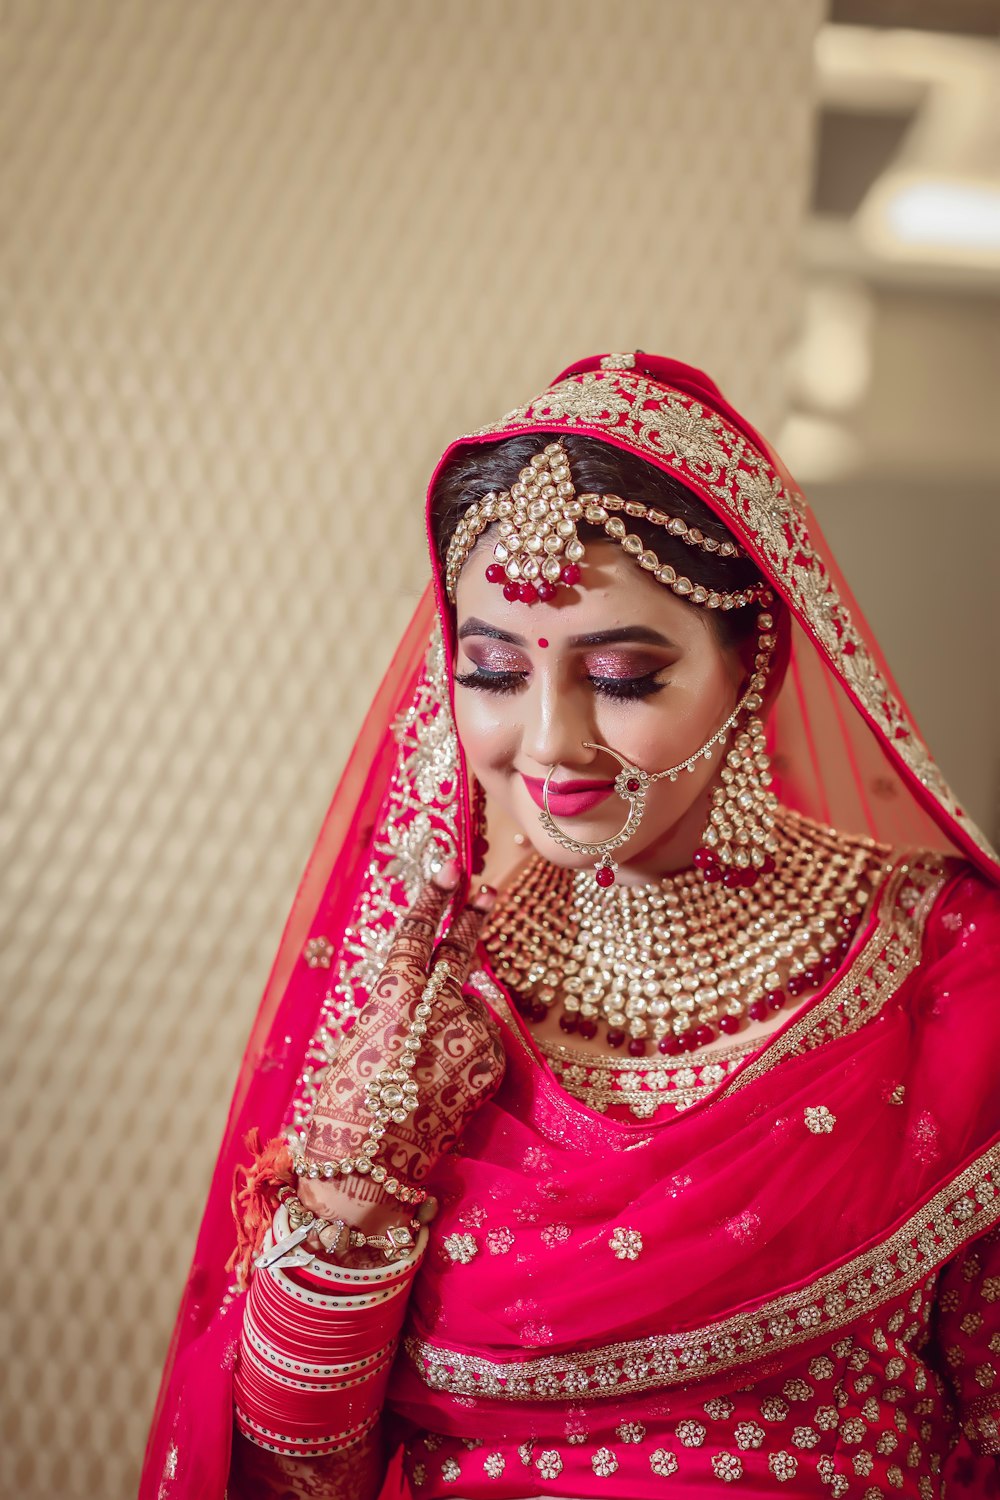 500+ Indian Bride Pictures  Download Free Images on Unsplash